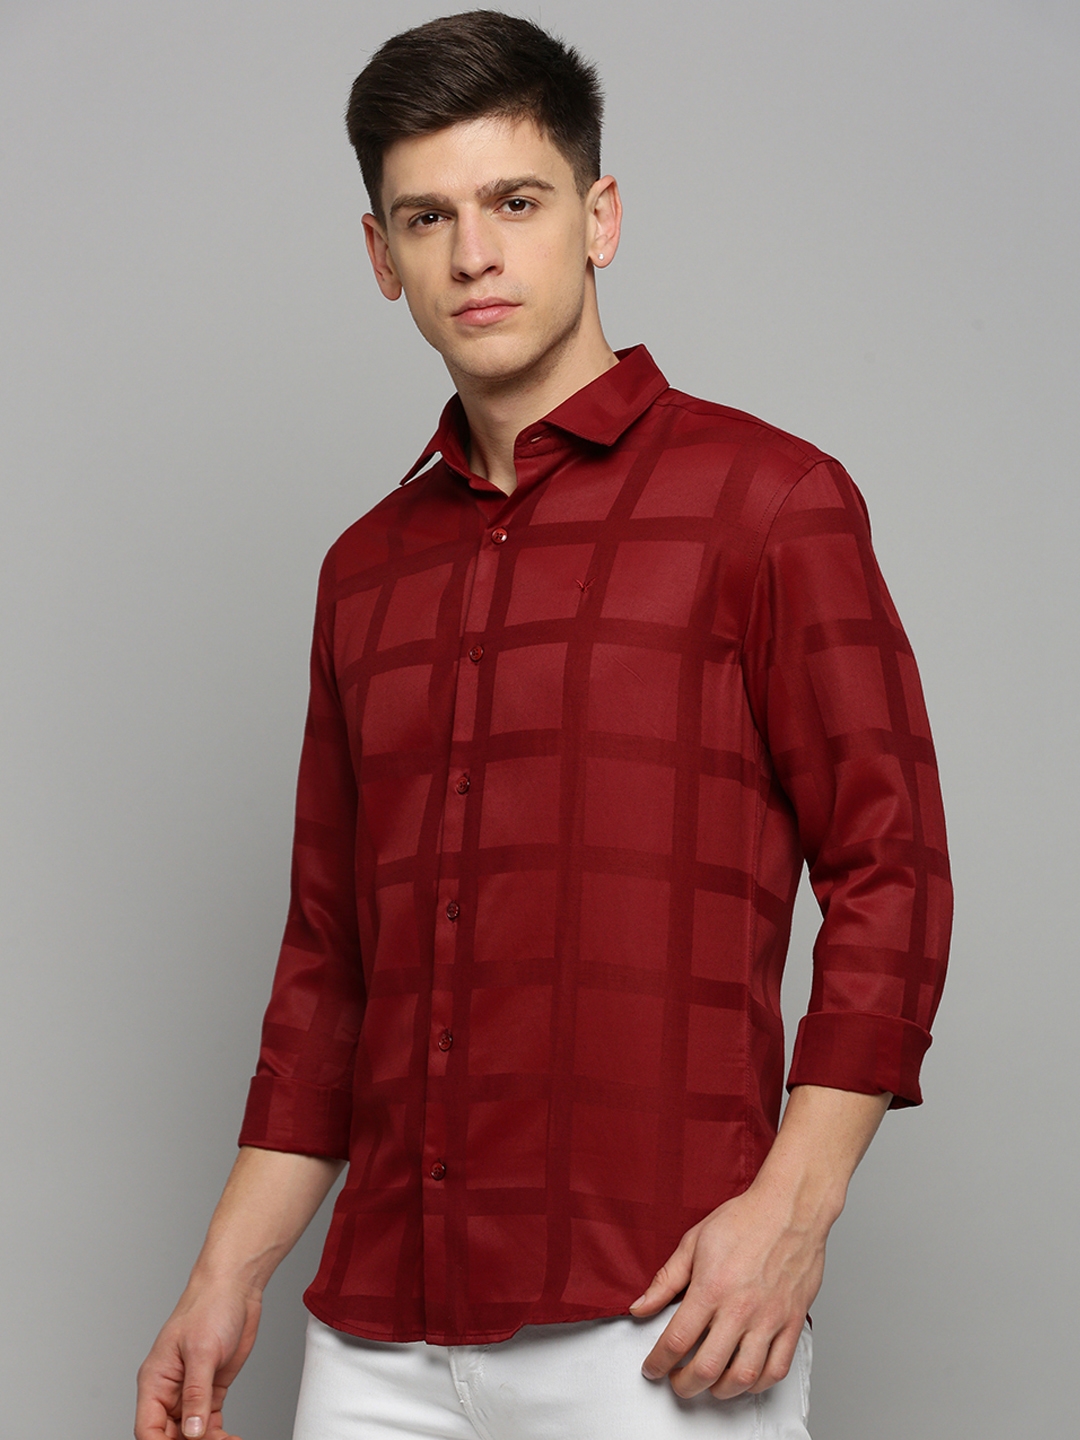 Showoff | SHOWOFF Men's Spread Collar Solid Maroon Classic Shirt 2